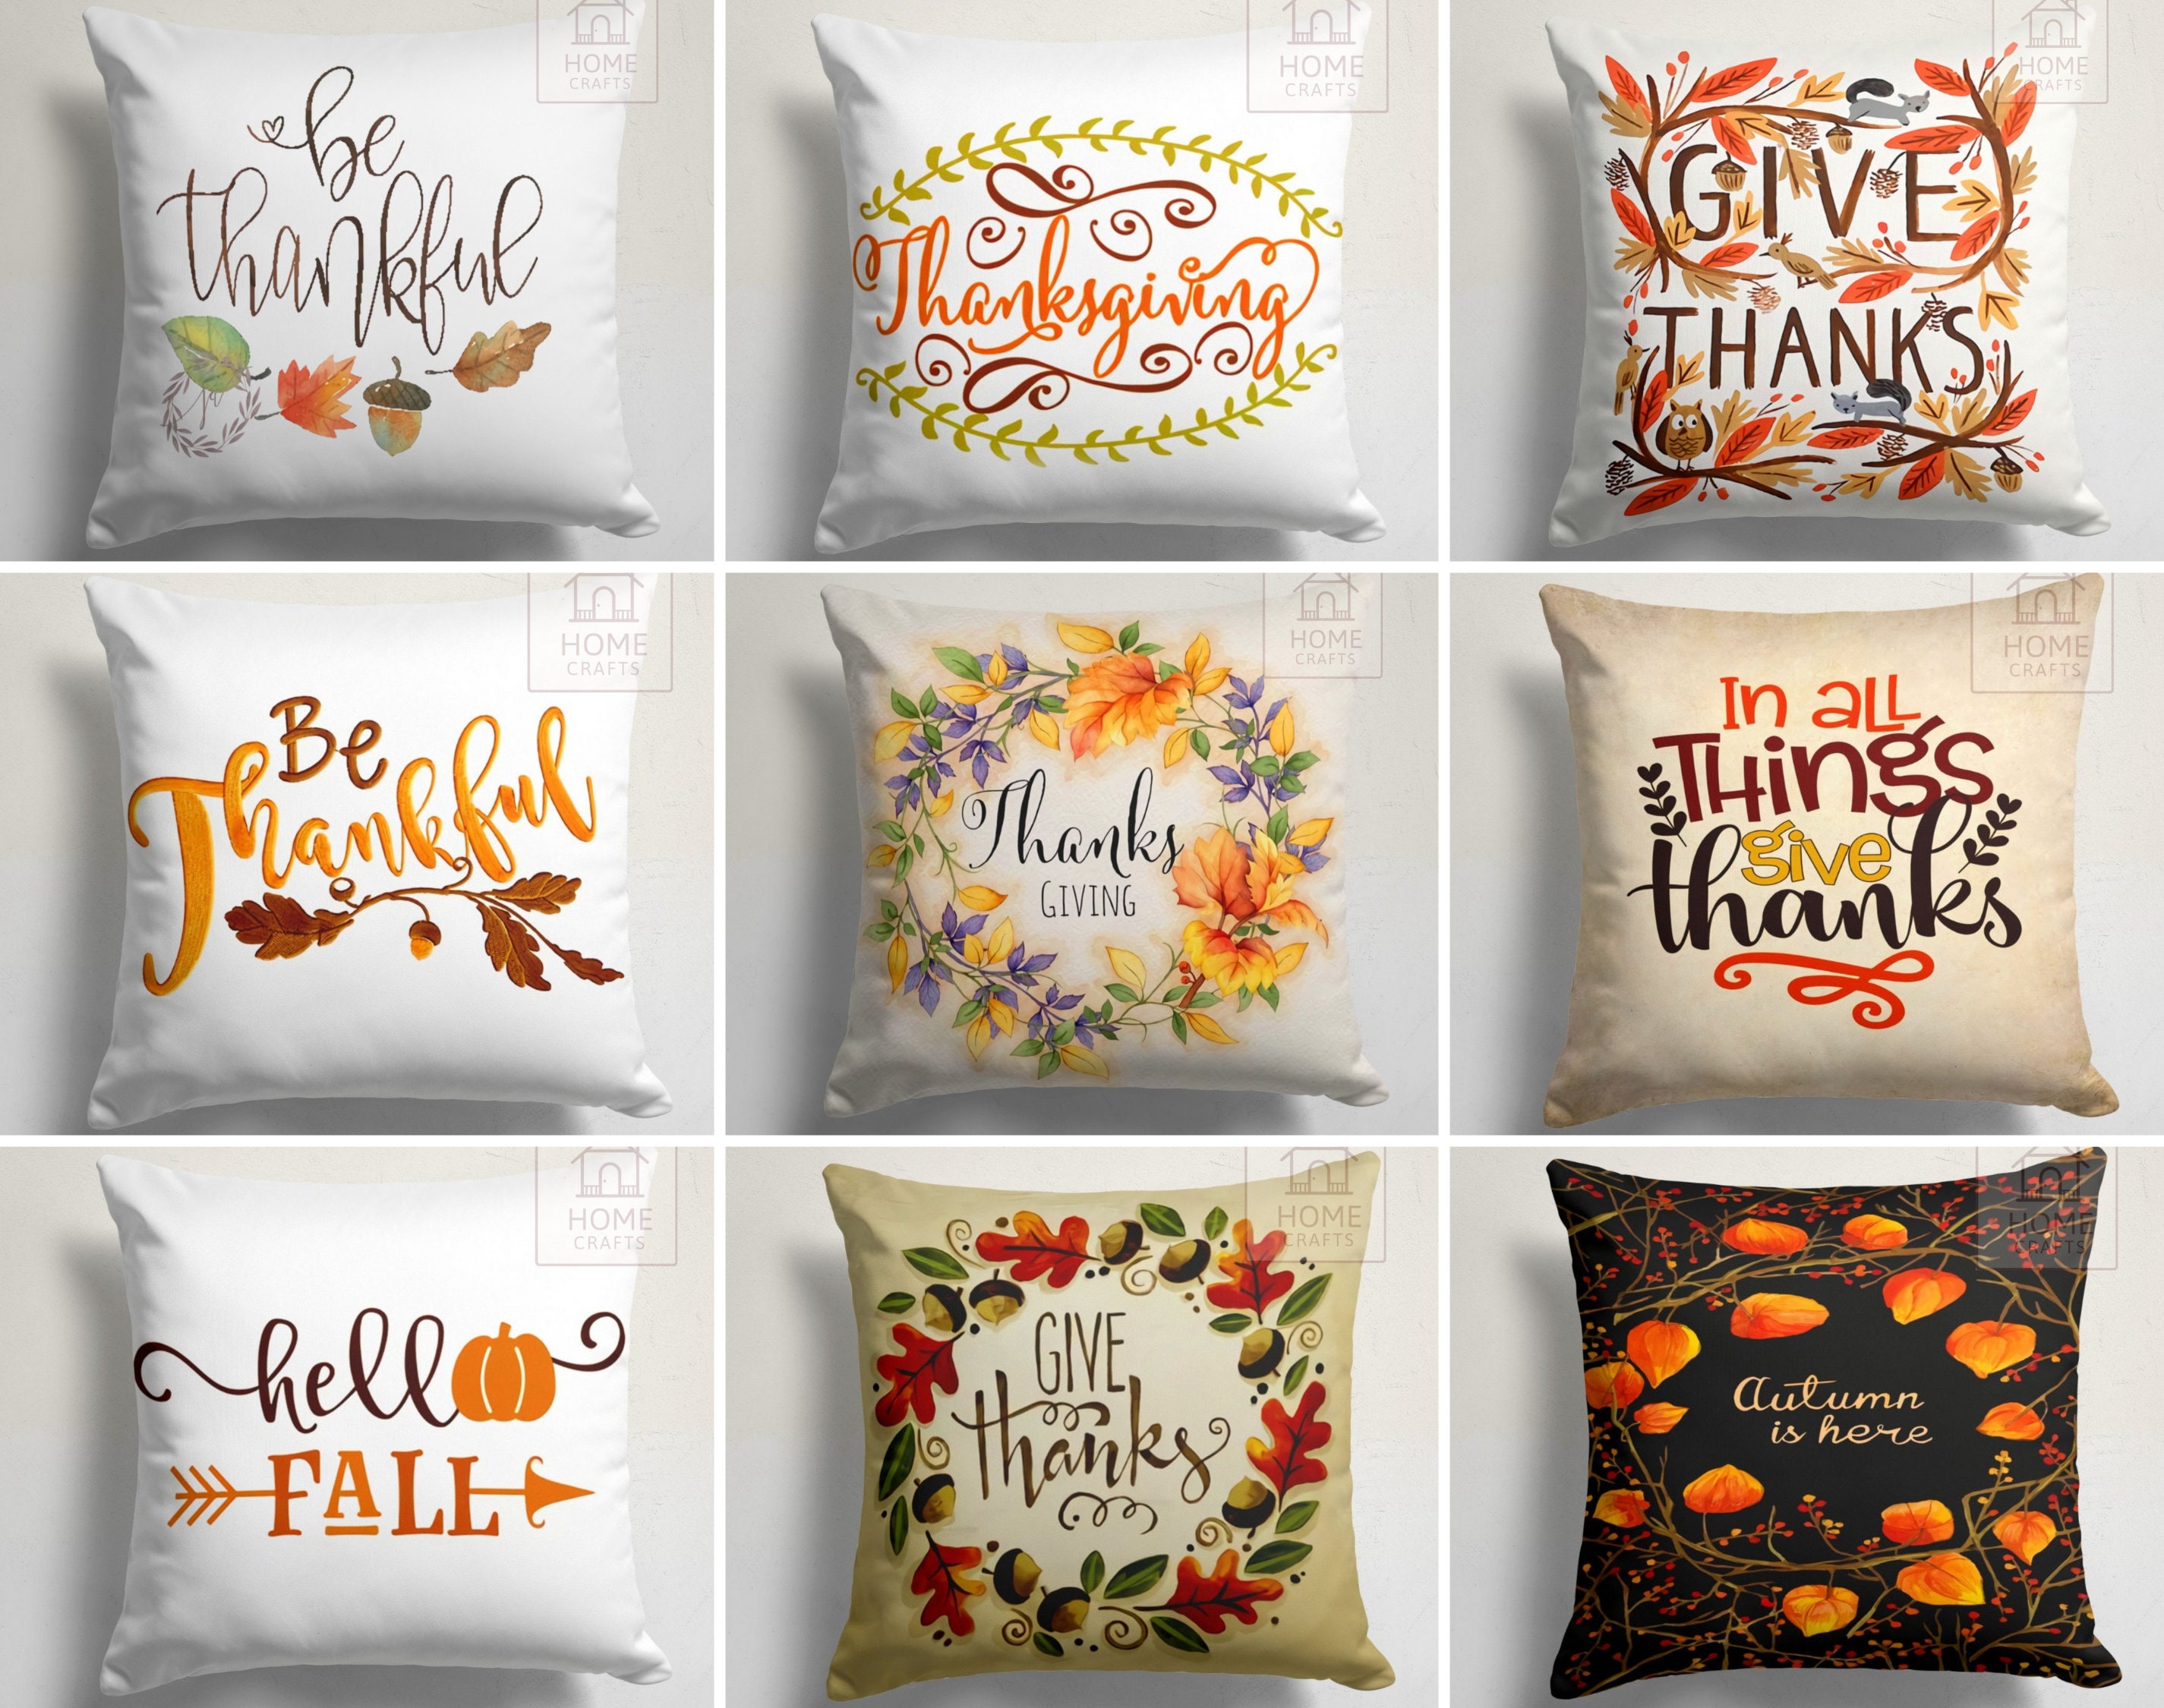 Give Thanks Throw Pillow Cover 16x16, Fall , Thanksgivng, Turkey, Autumn,  Fall Throw Pillow, Rustic Throw Pillow, Farmhouse Pillow 